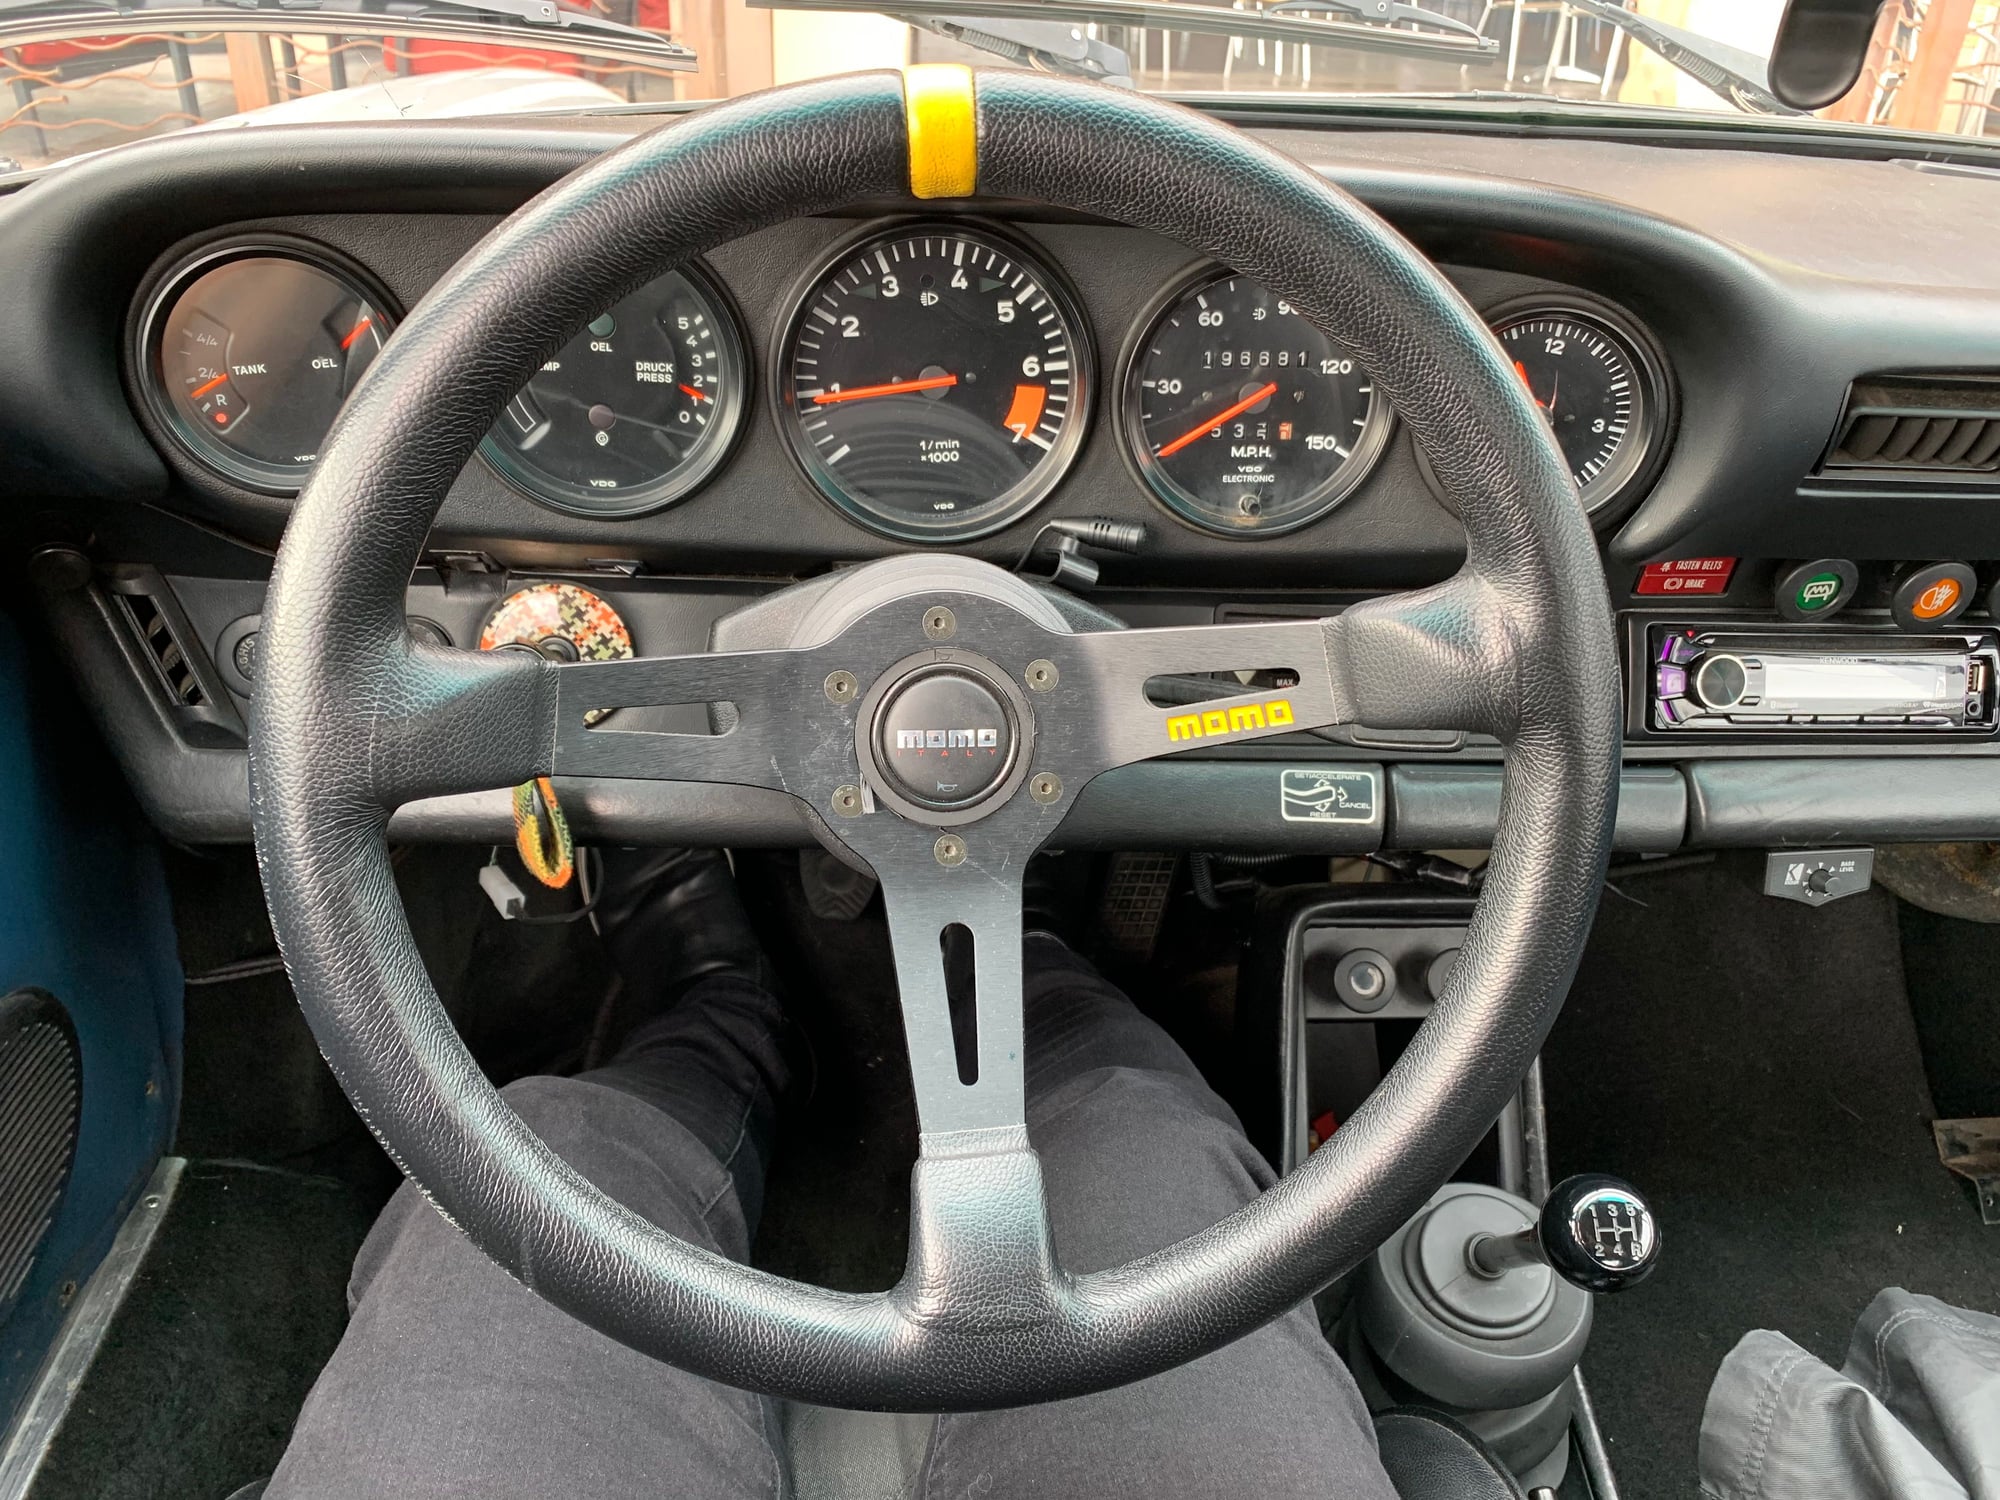 Steering/Suspension - Momo Mod 08 Steering Wheel - Used - All Years Porsche All Models - Las Vegas, NV 89108, United States